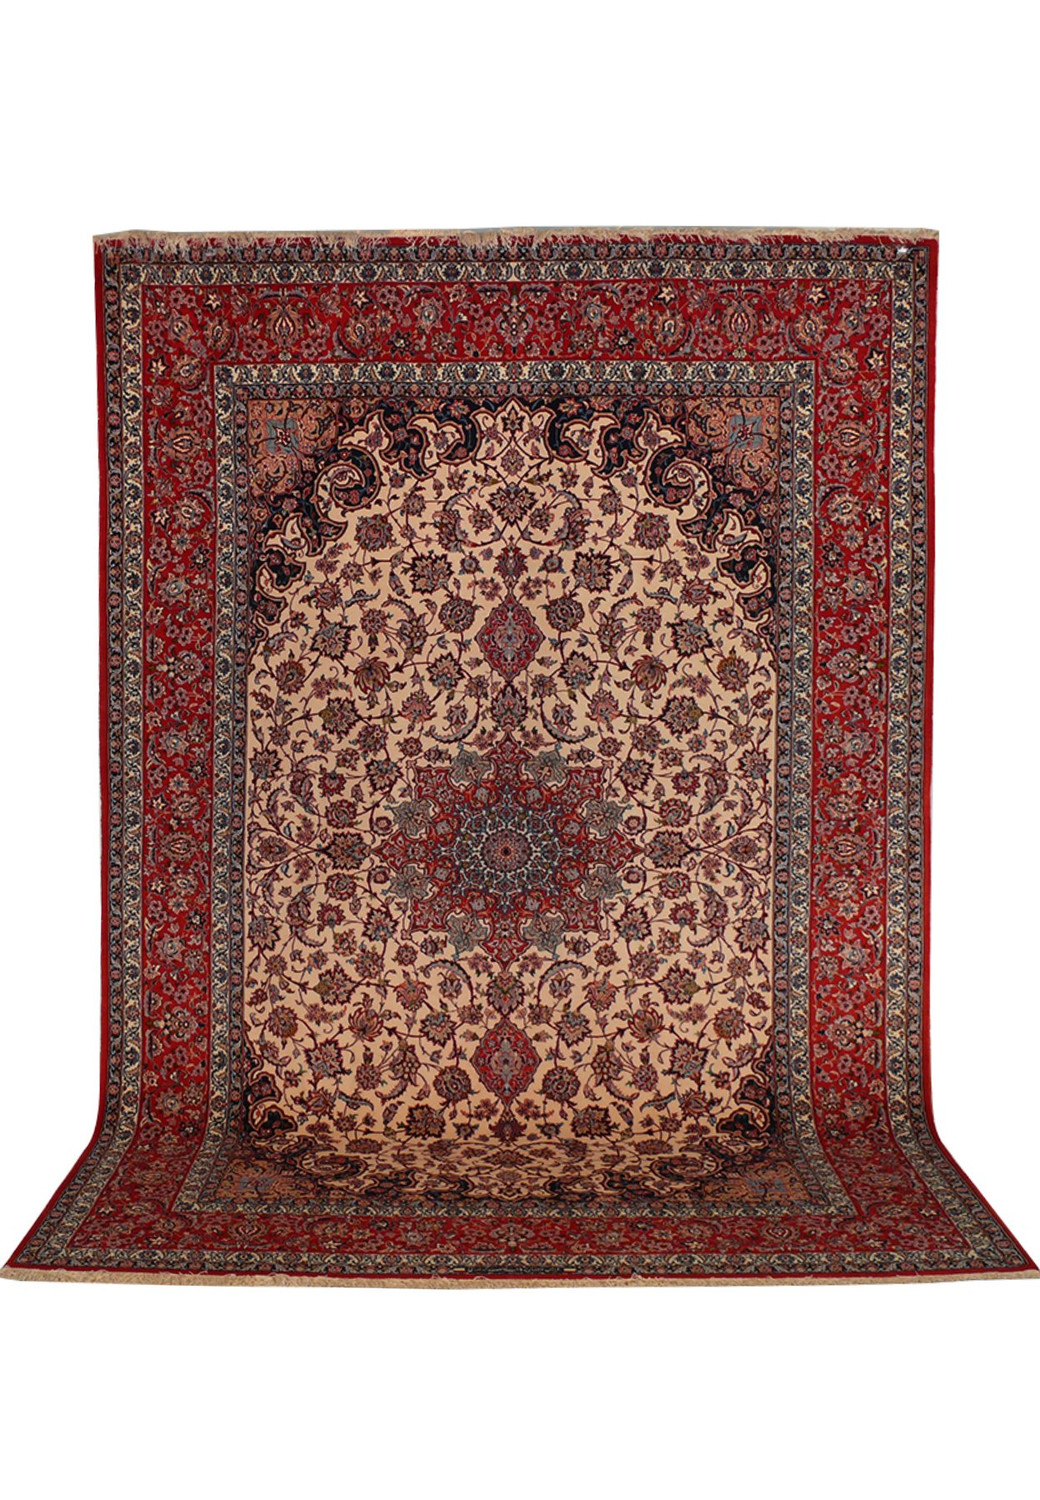 8'2 x 11'6 Premium High End Persian Isfahan Wool & Silk Rug